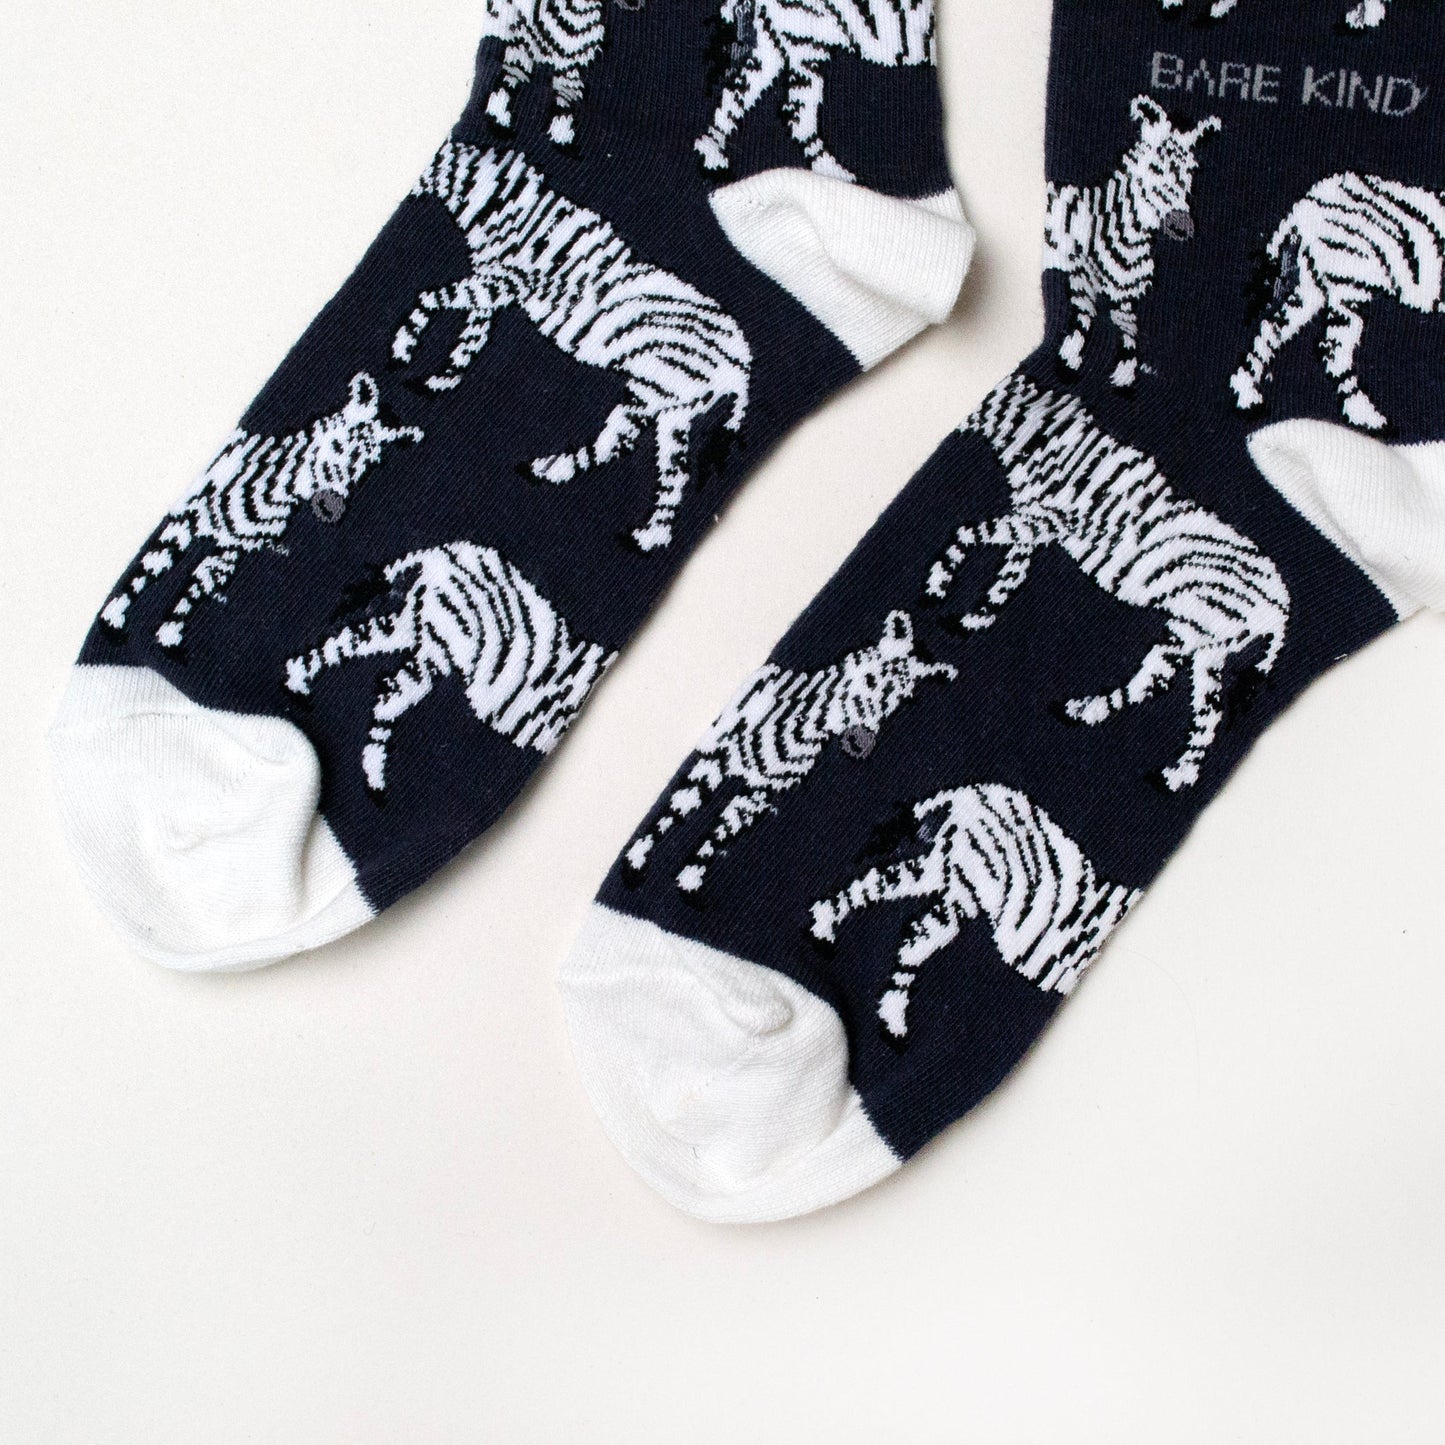 Save the Zebra Socks